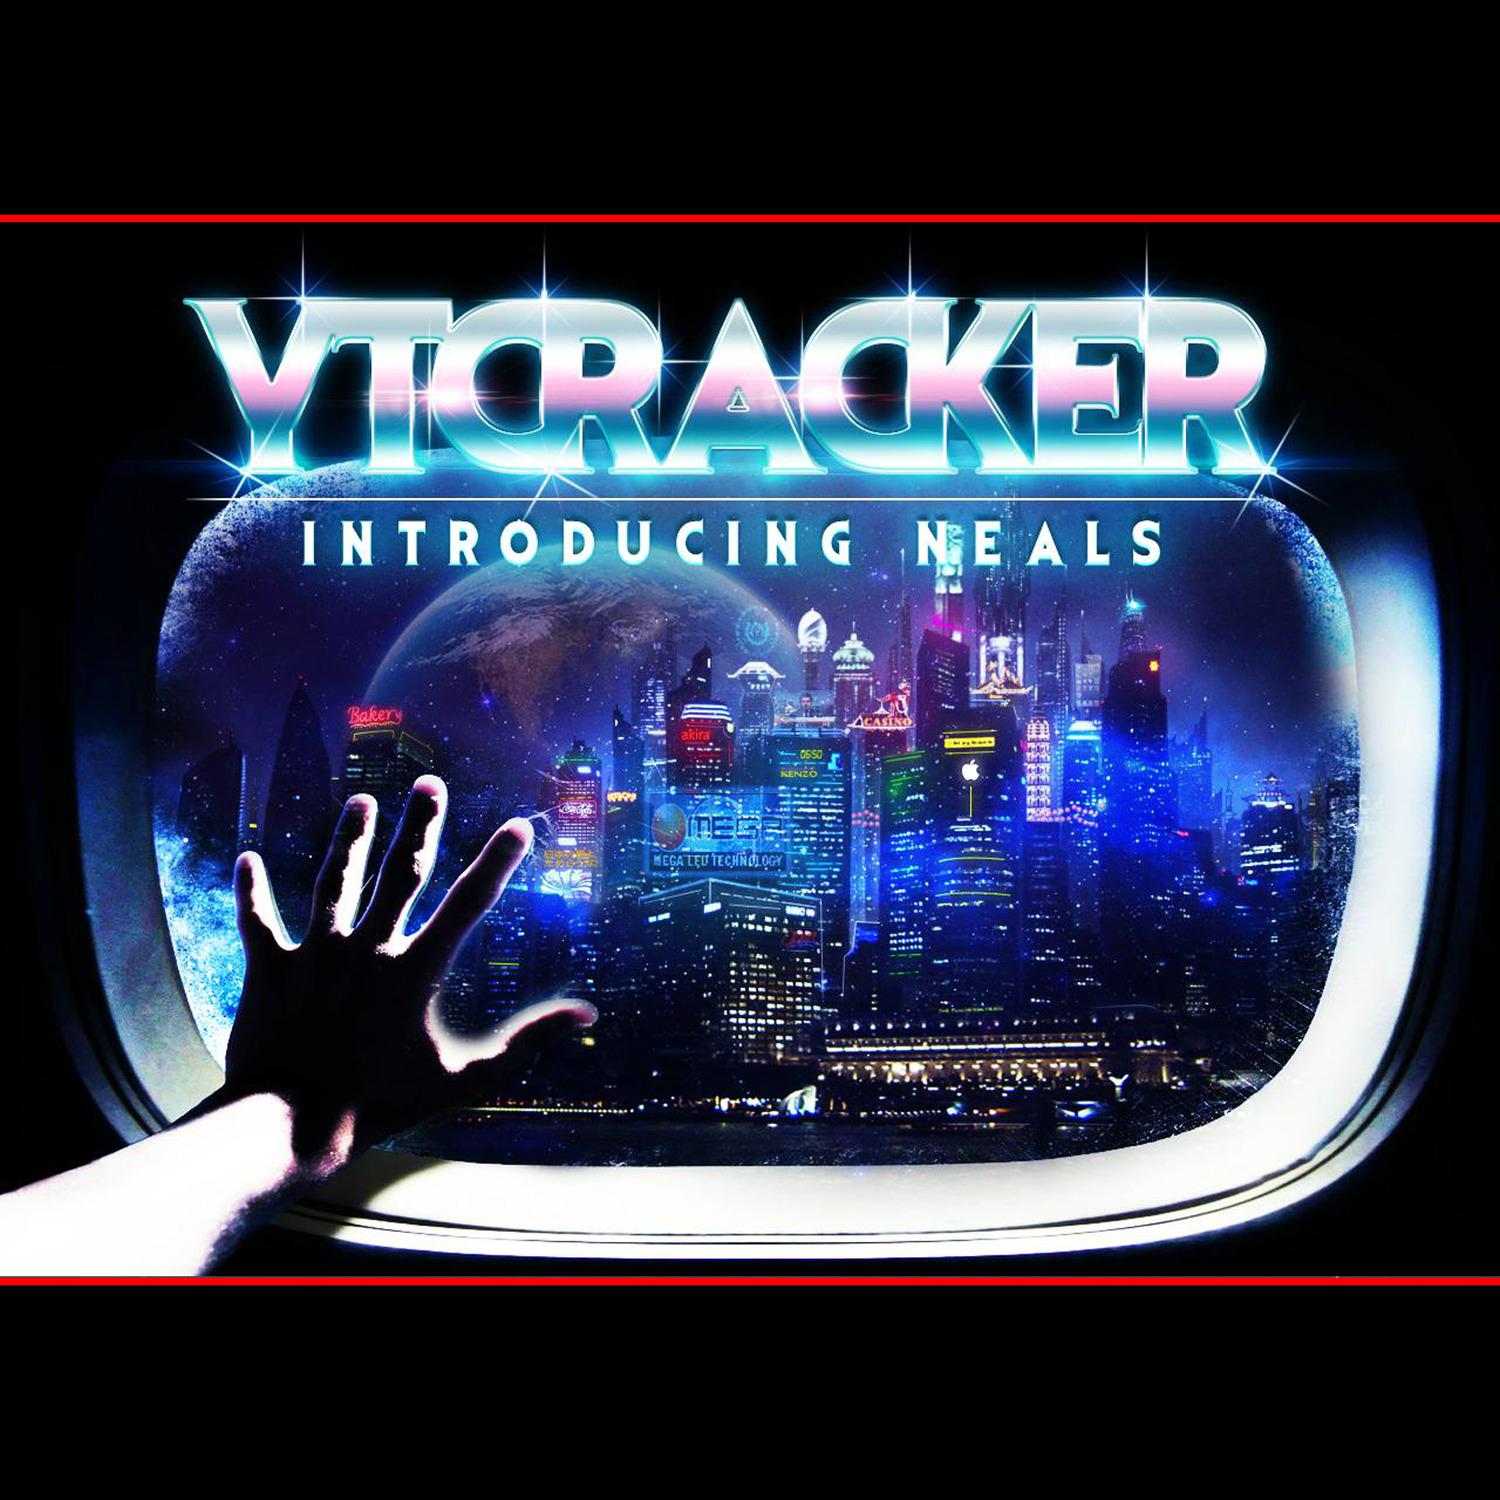 YTCracker - Welcome to San Secuestro